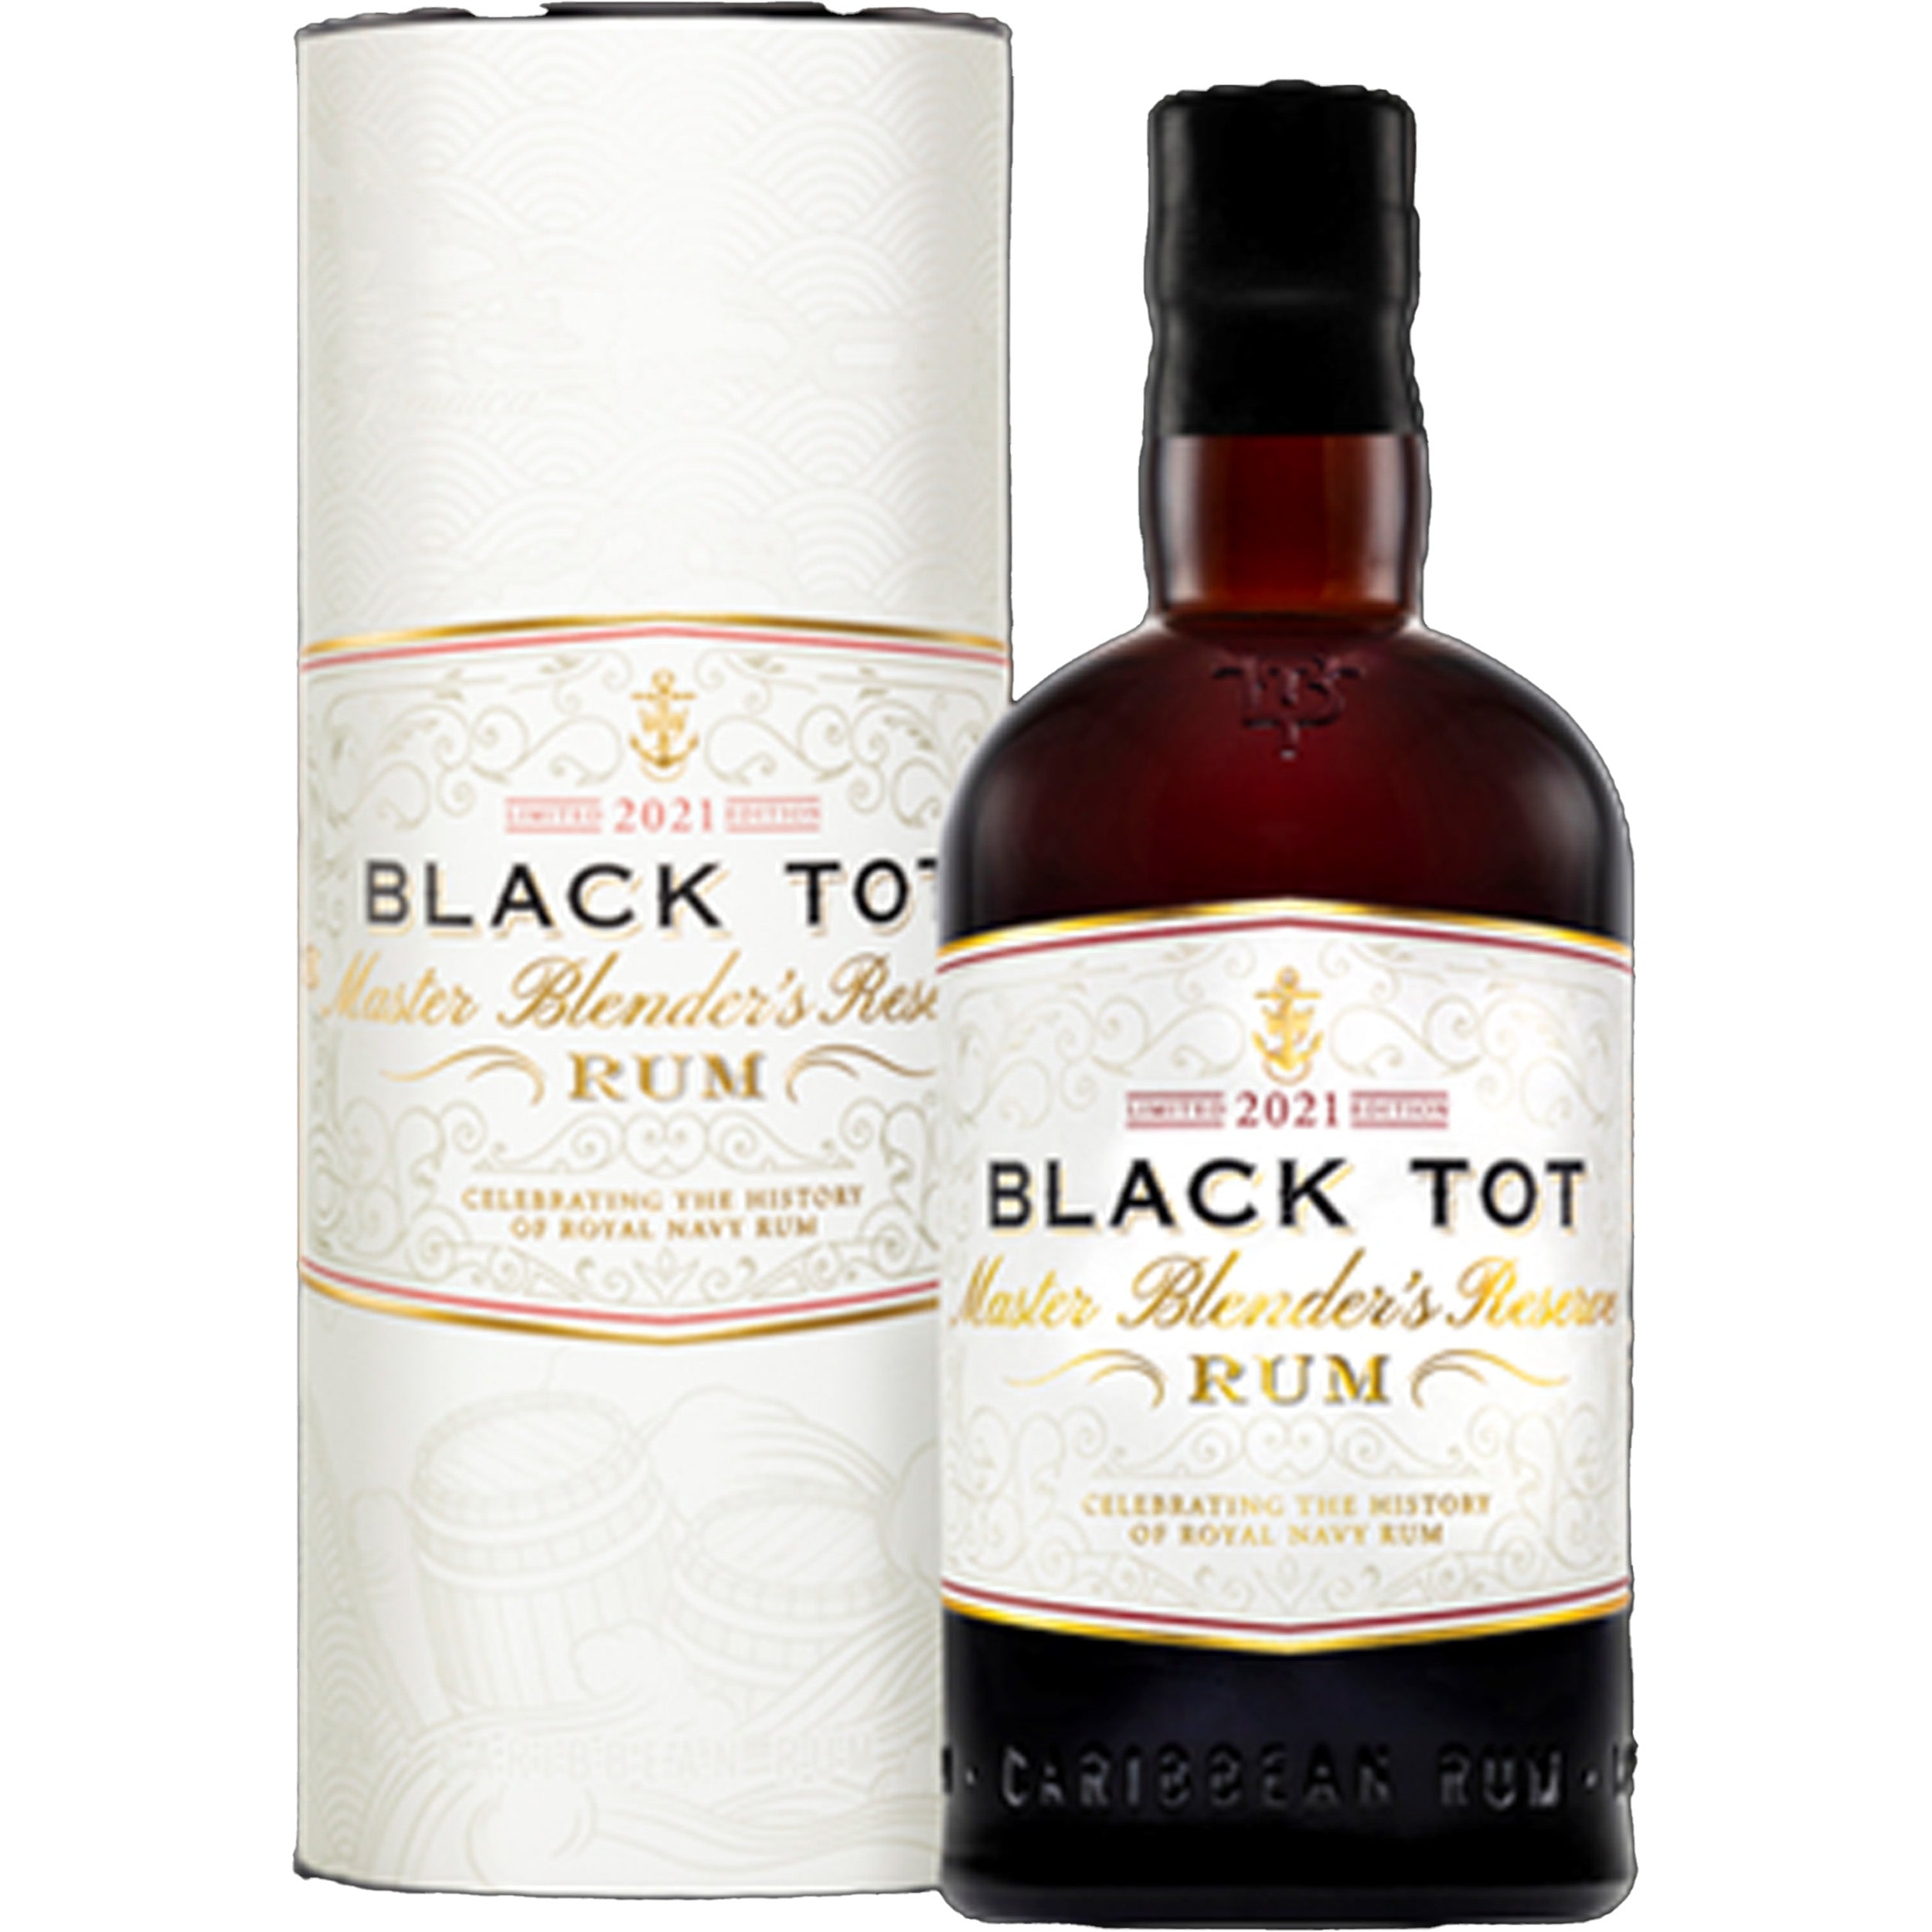 The Black Tot Limited Edition Master Blender's Reserve Rum